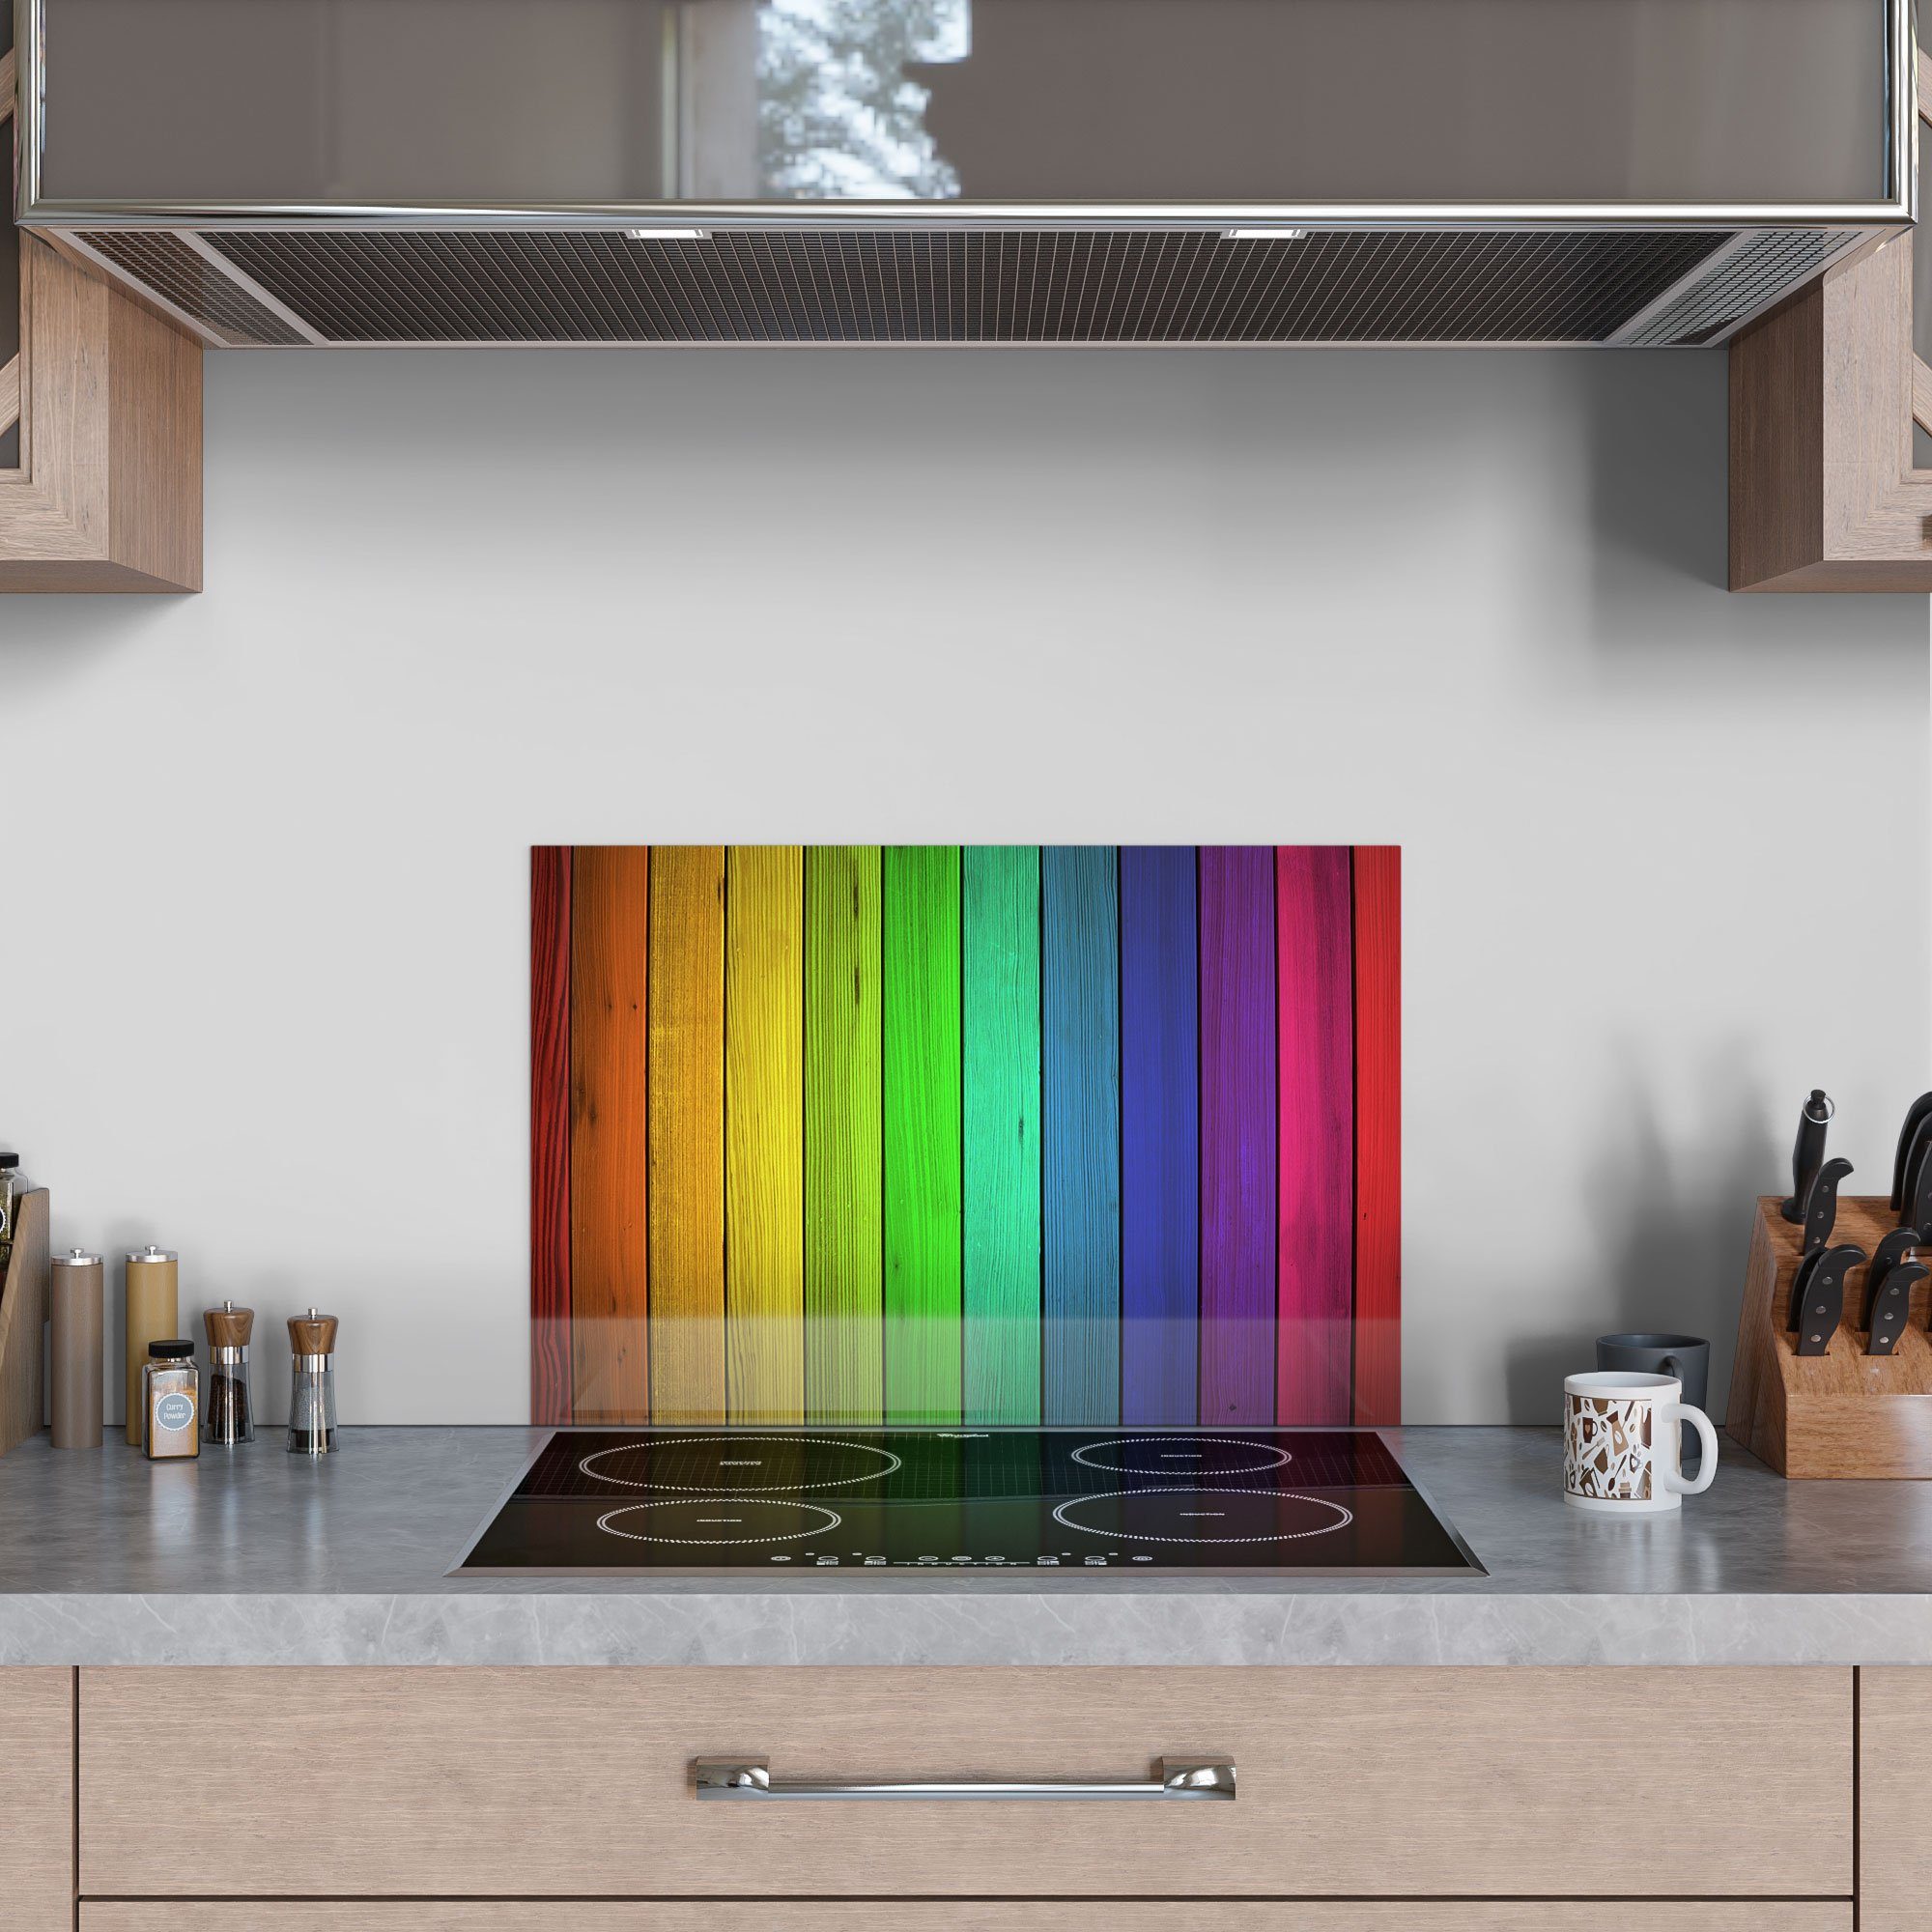 Badrückwand Herdblende DEQORI 'Farbige Küchenrückwand Holzlatten', Spritzschutz Glas